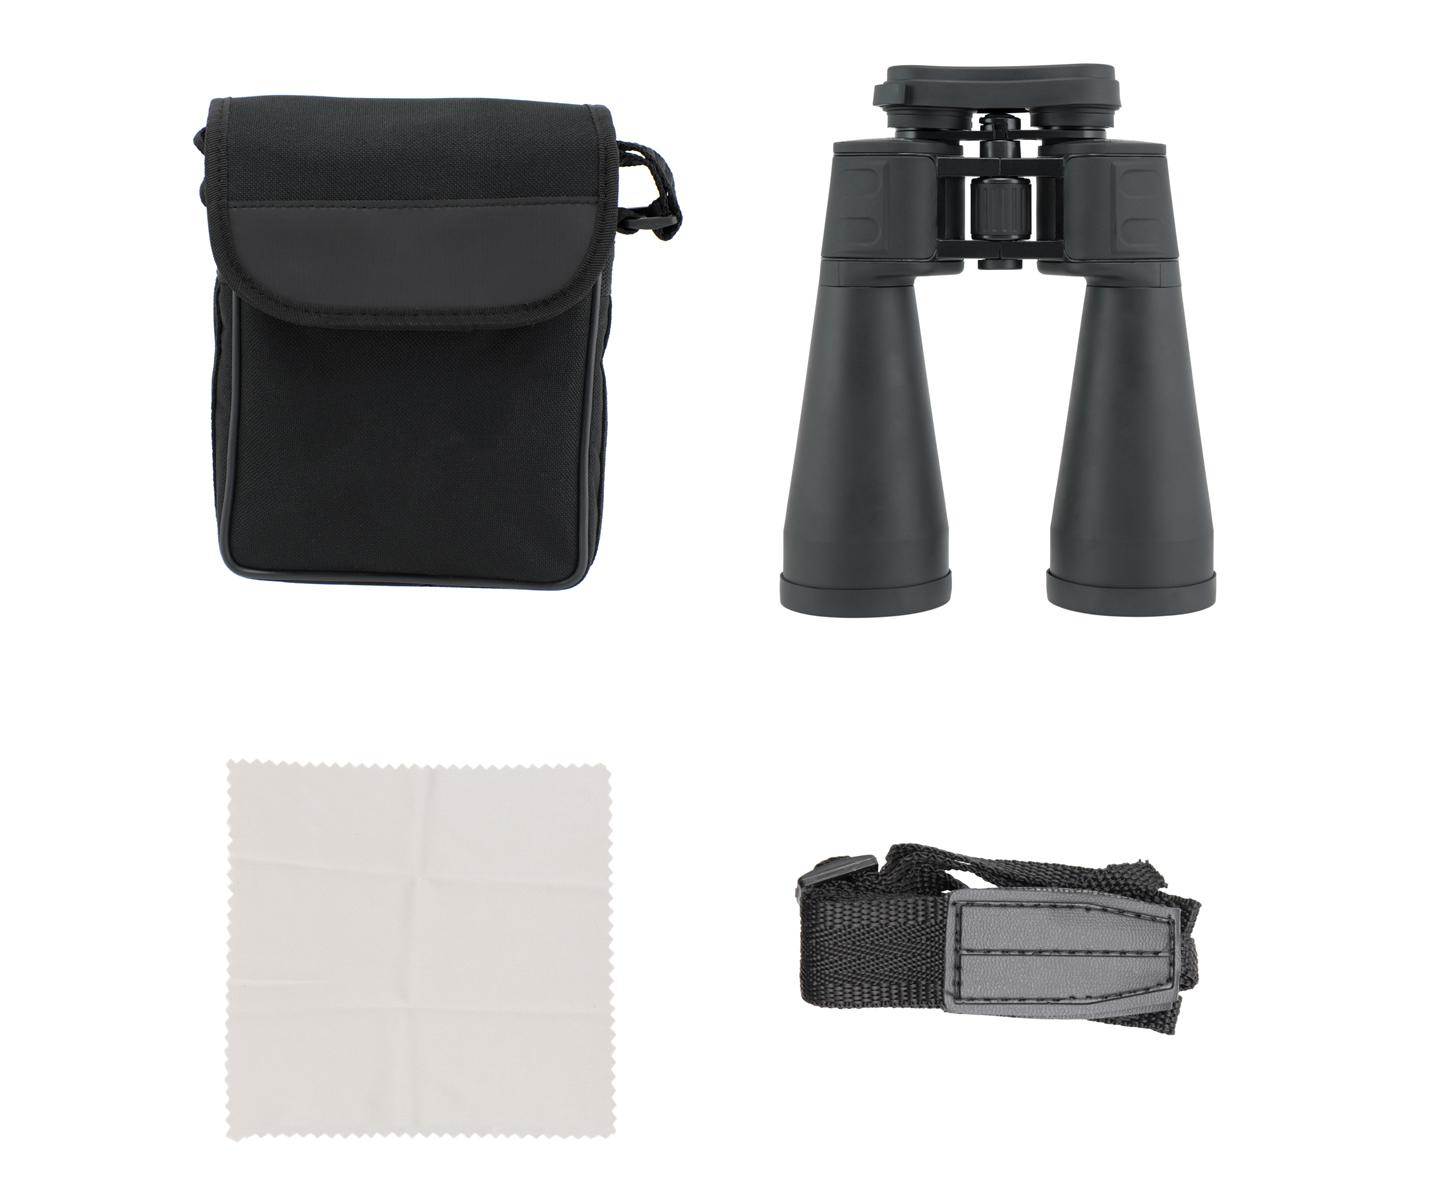  TS-Optics 11x70 LE Porro Prism Binoculars - perfect for twilight and night [EN] 